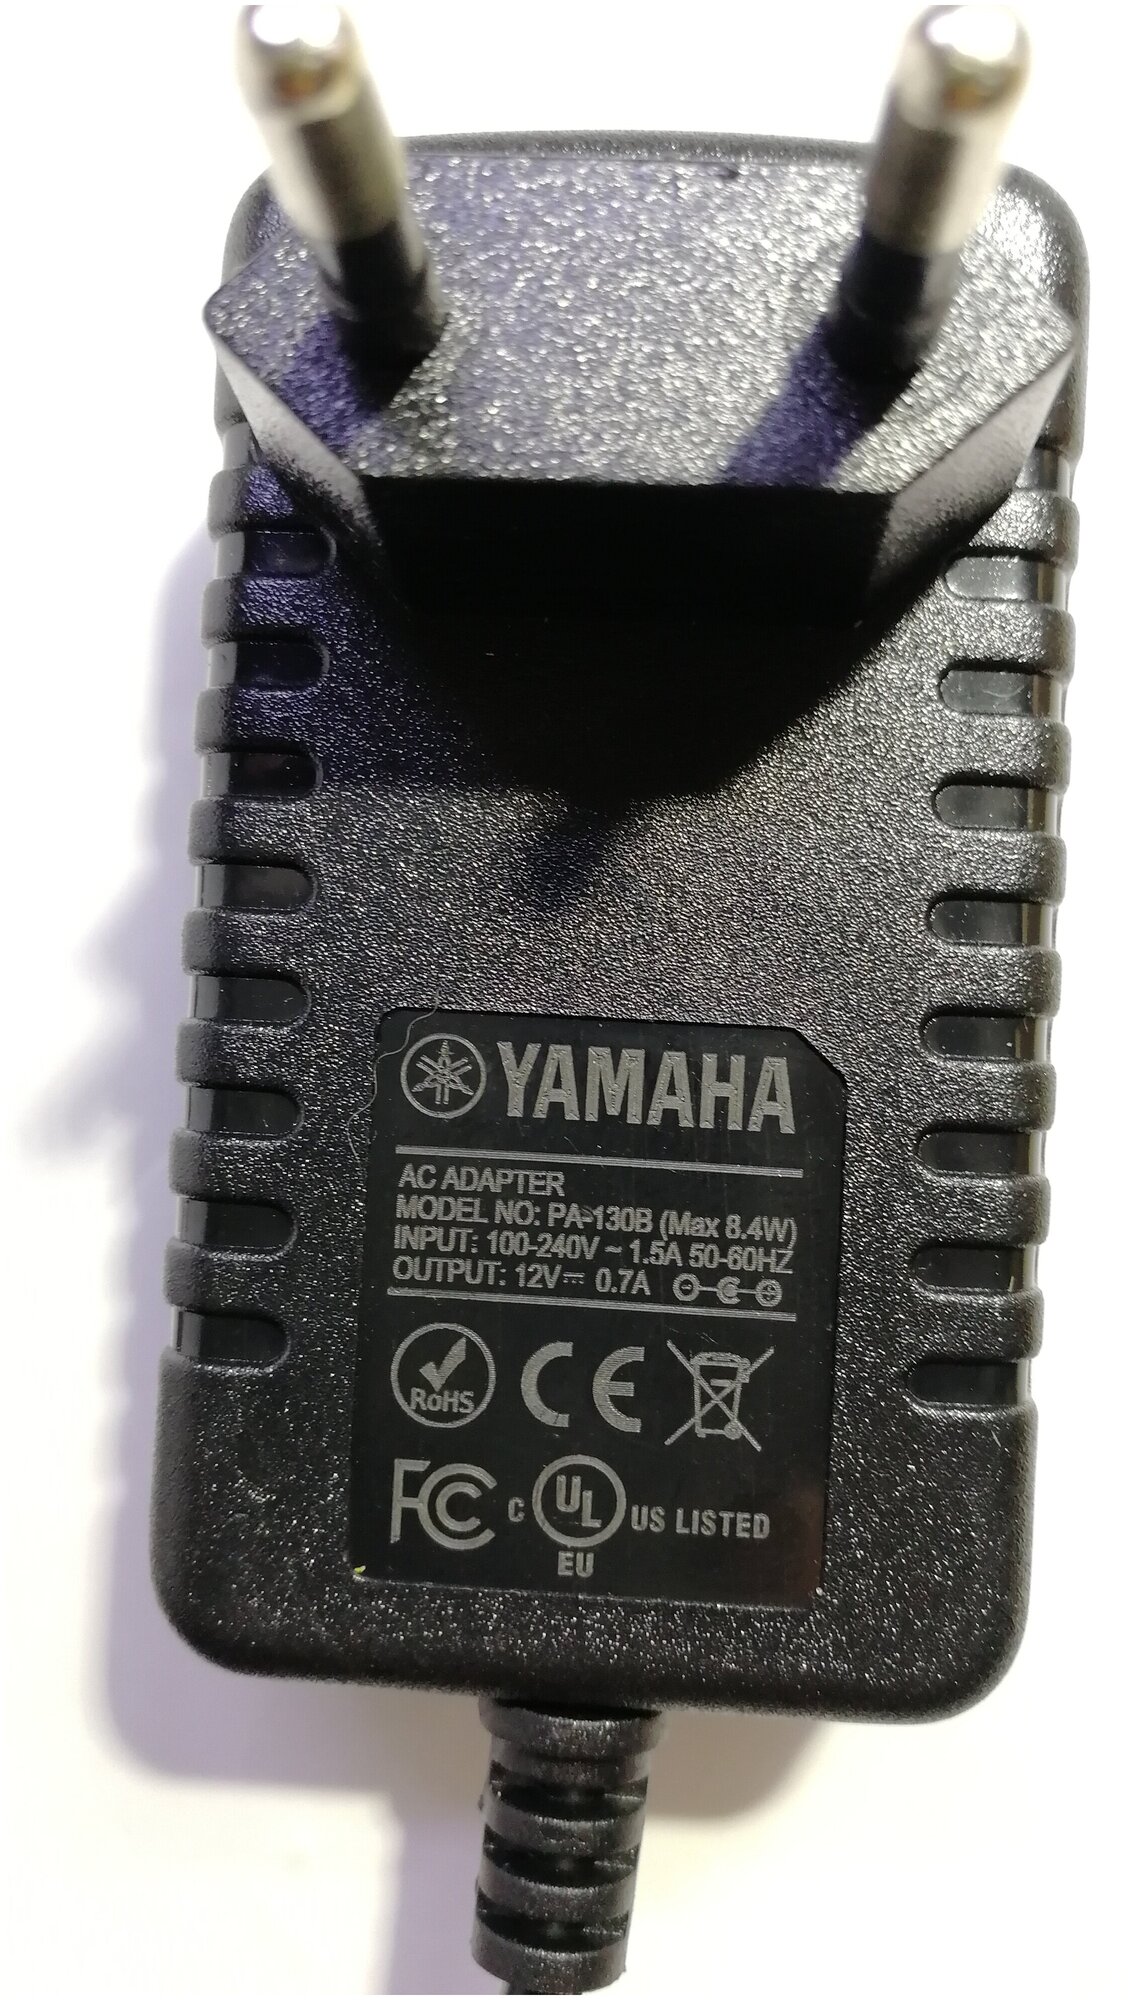 Адаптер, блок питания PA-130B для синтезаторов Yamaha 12v 0.7a разъём 5.5 x 2.5 mm